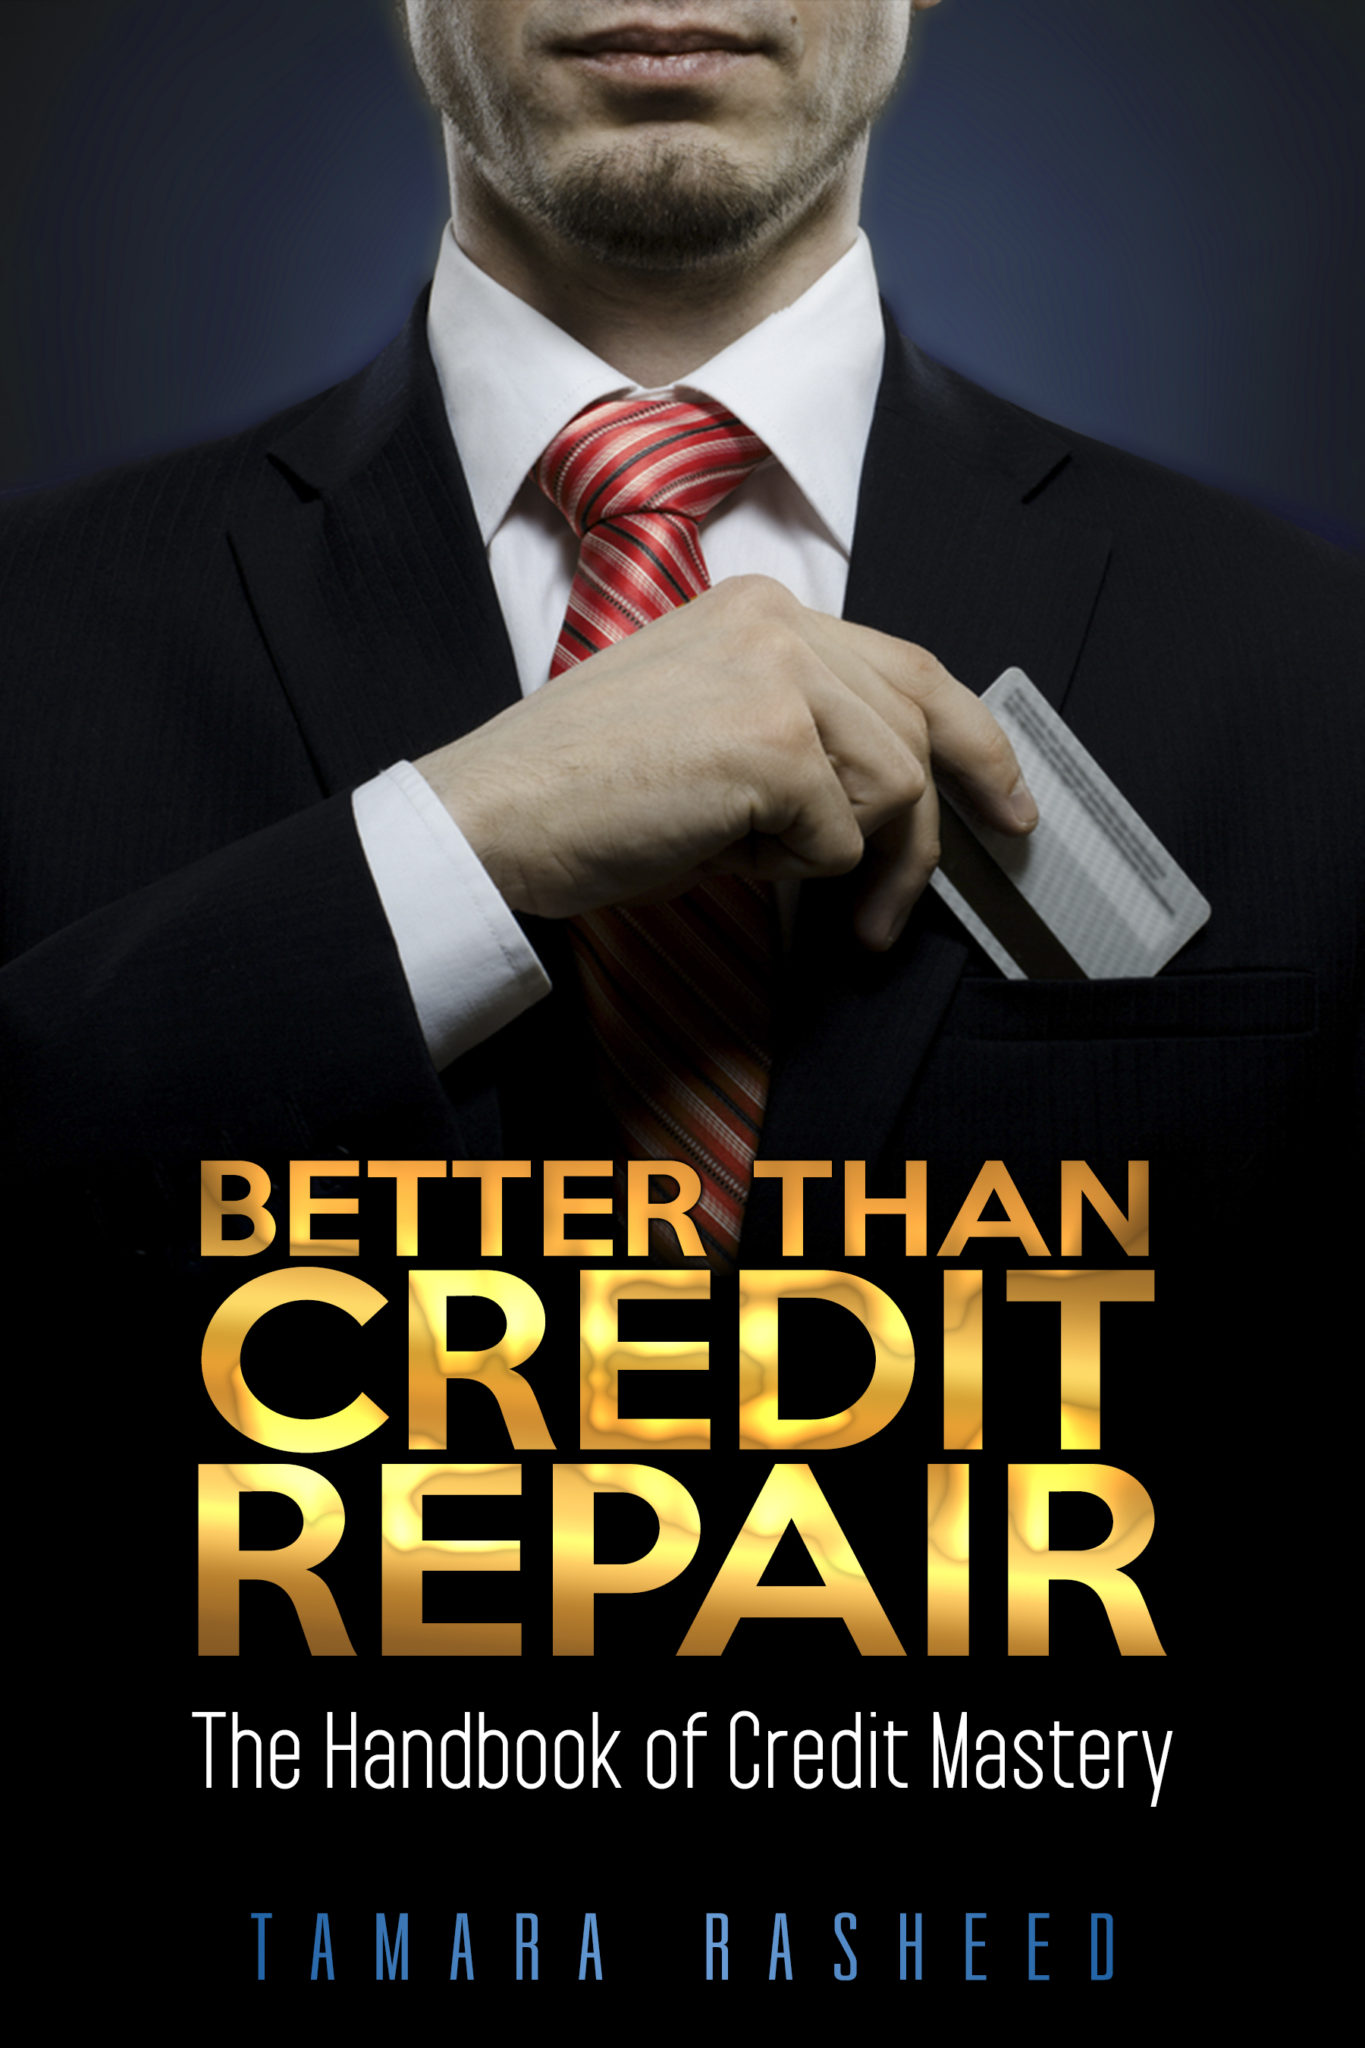 Better Than Credit Repair: The Handbook of Credit Mastery by Tamara Rasheed